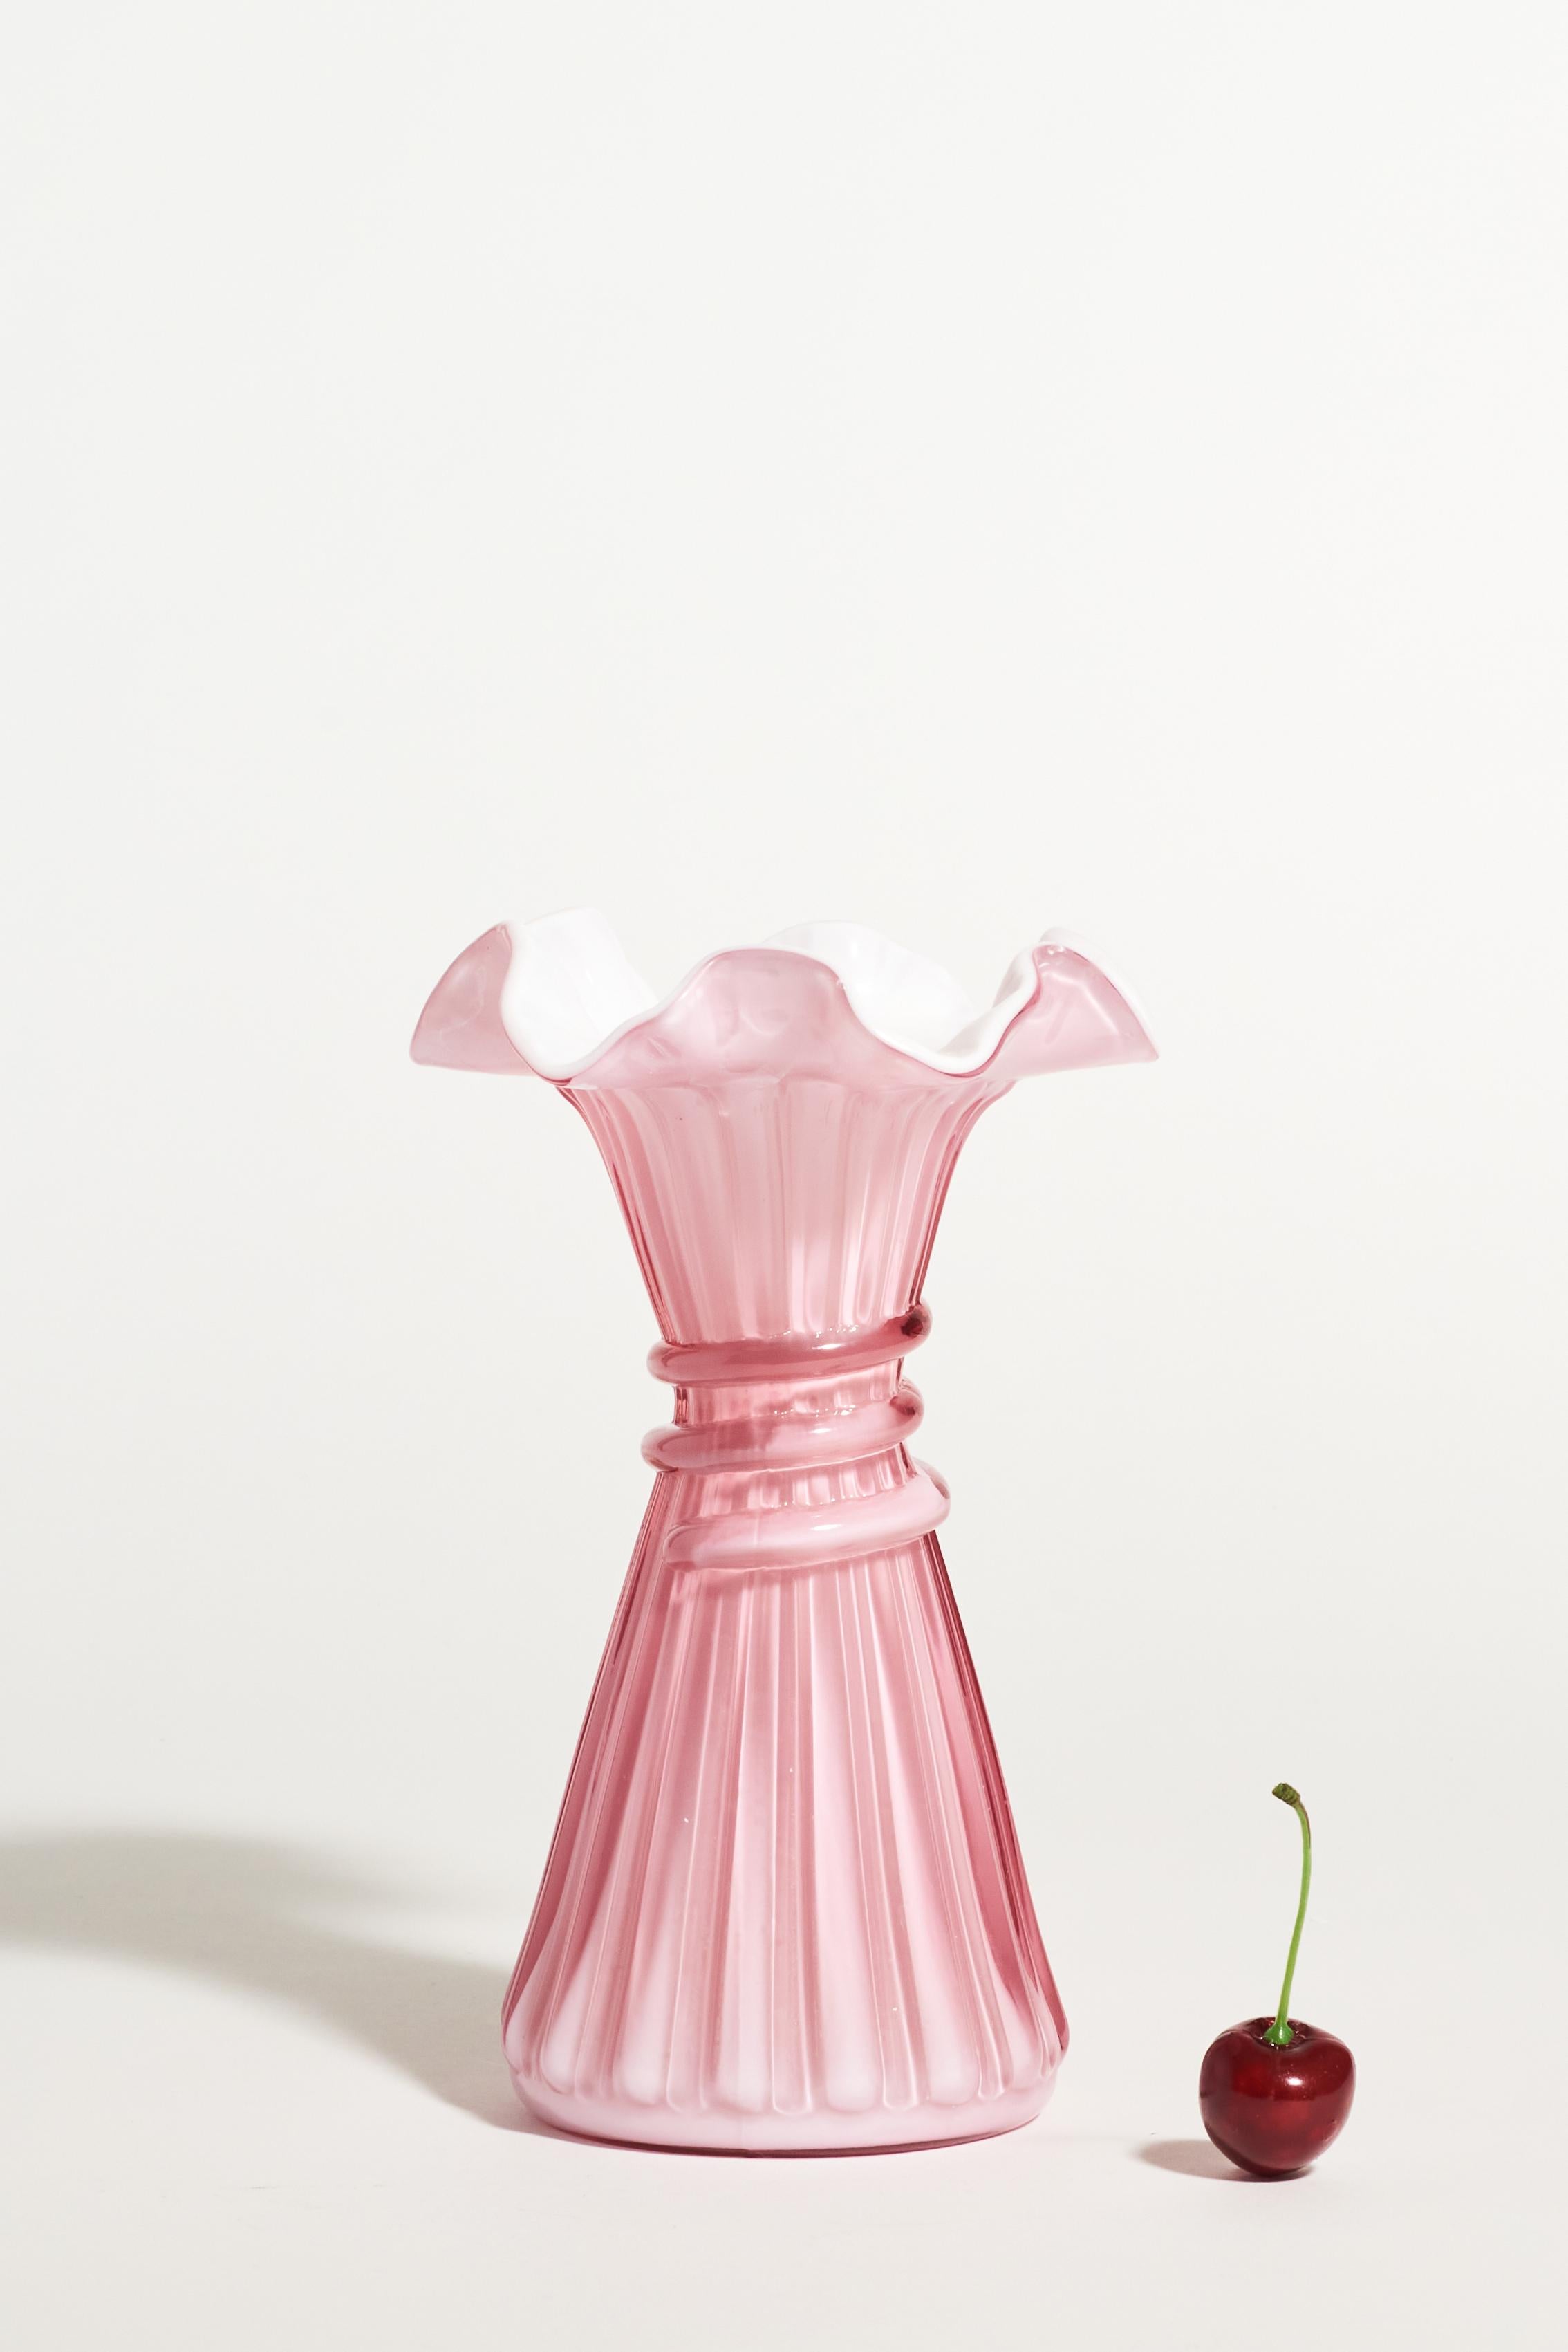 Tea Rose Pink and White Vase 3